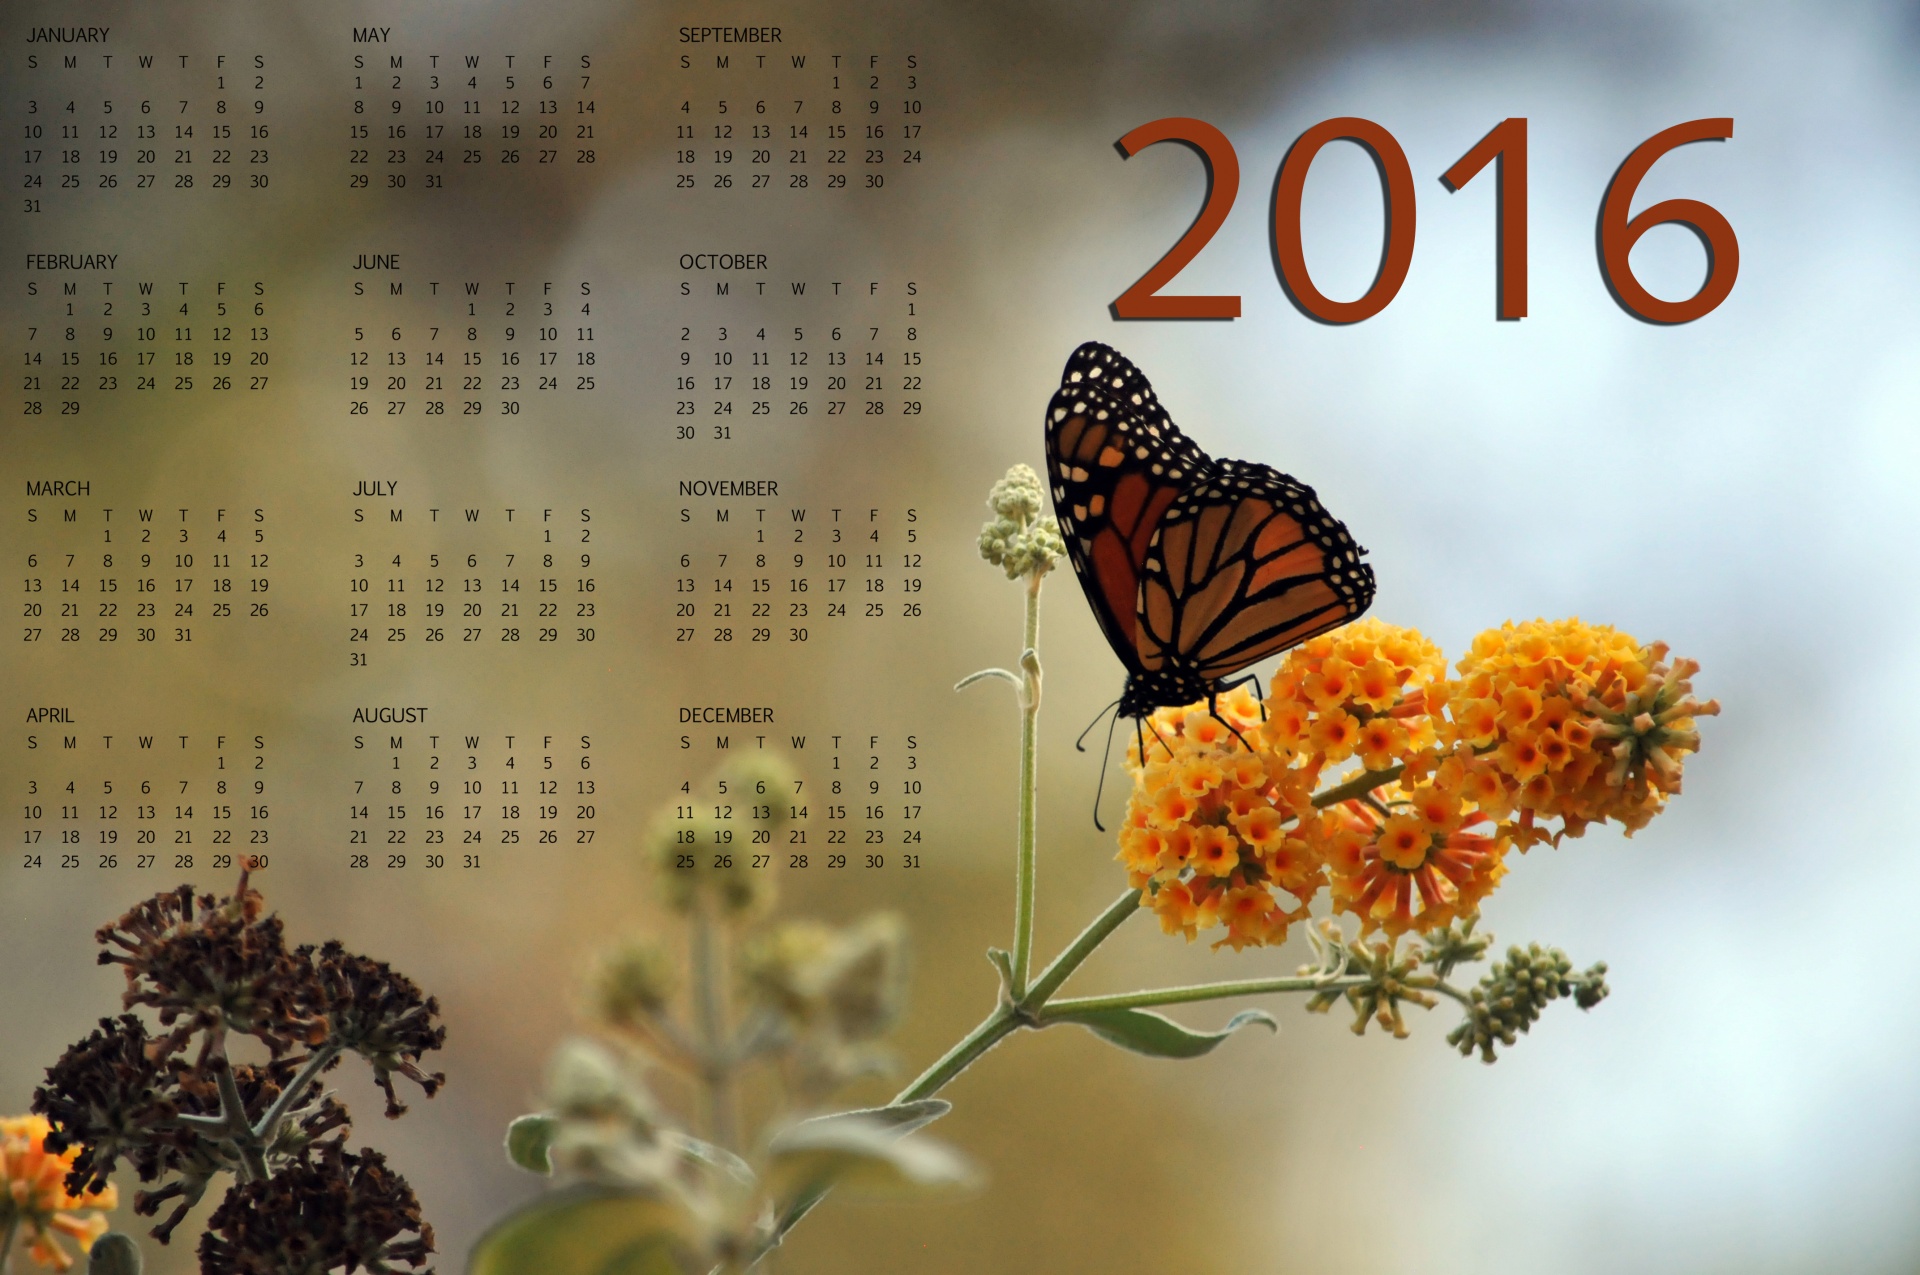 2016-monarch-butterfly-calendar-2-free-stock-photo-public-domain